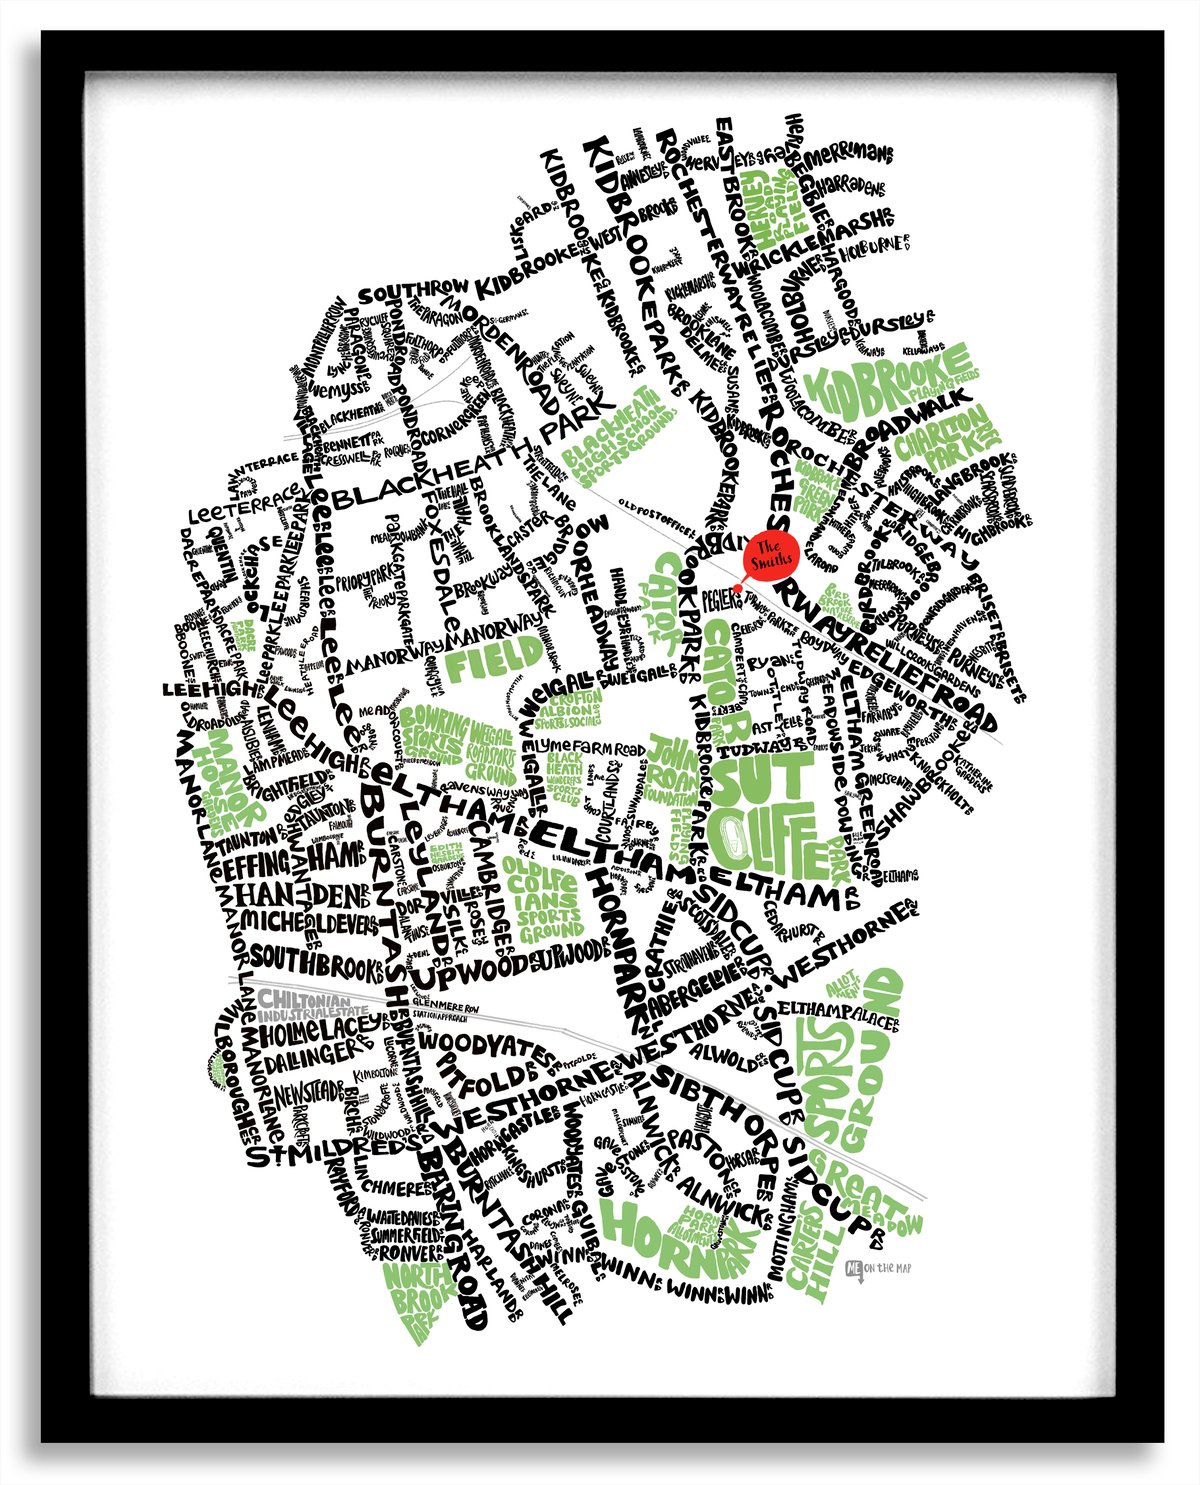 Image of Kidbrooke, Lee Green & Lee Typographic  Map